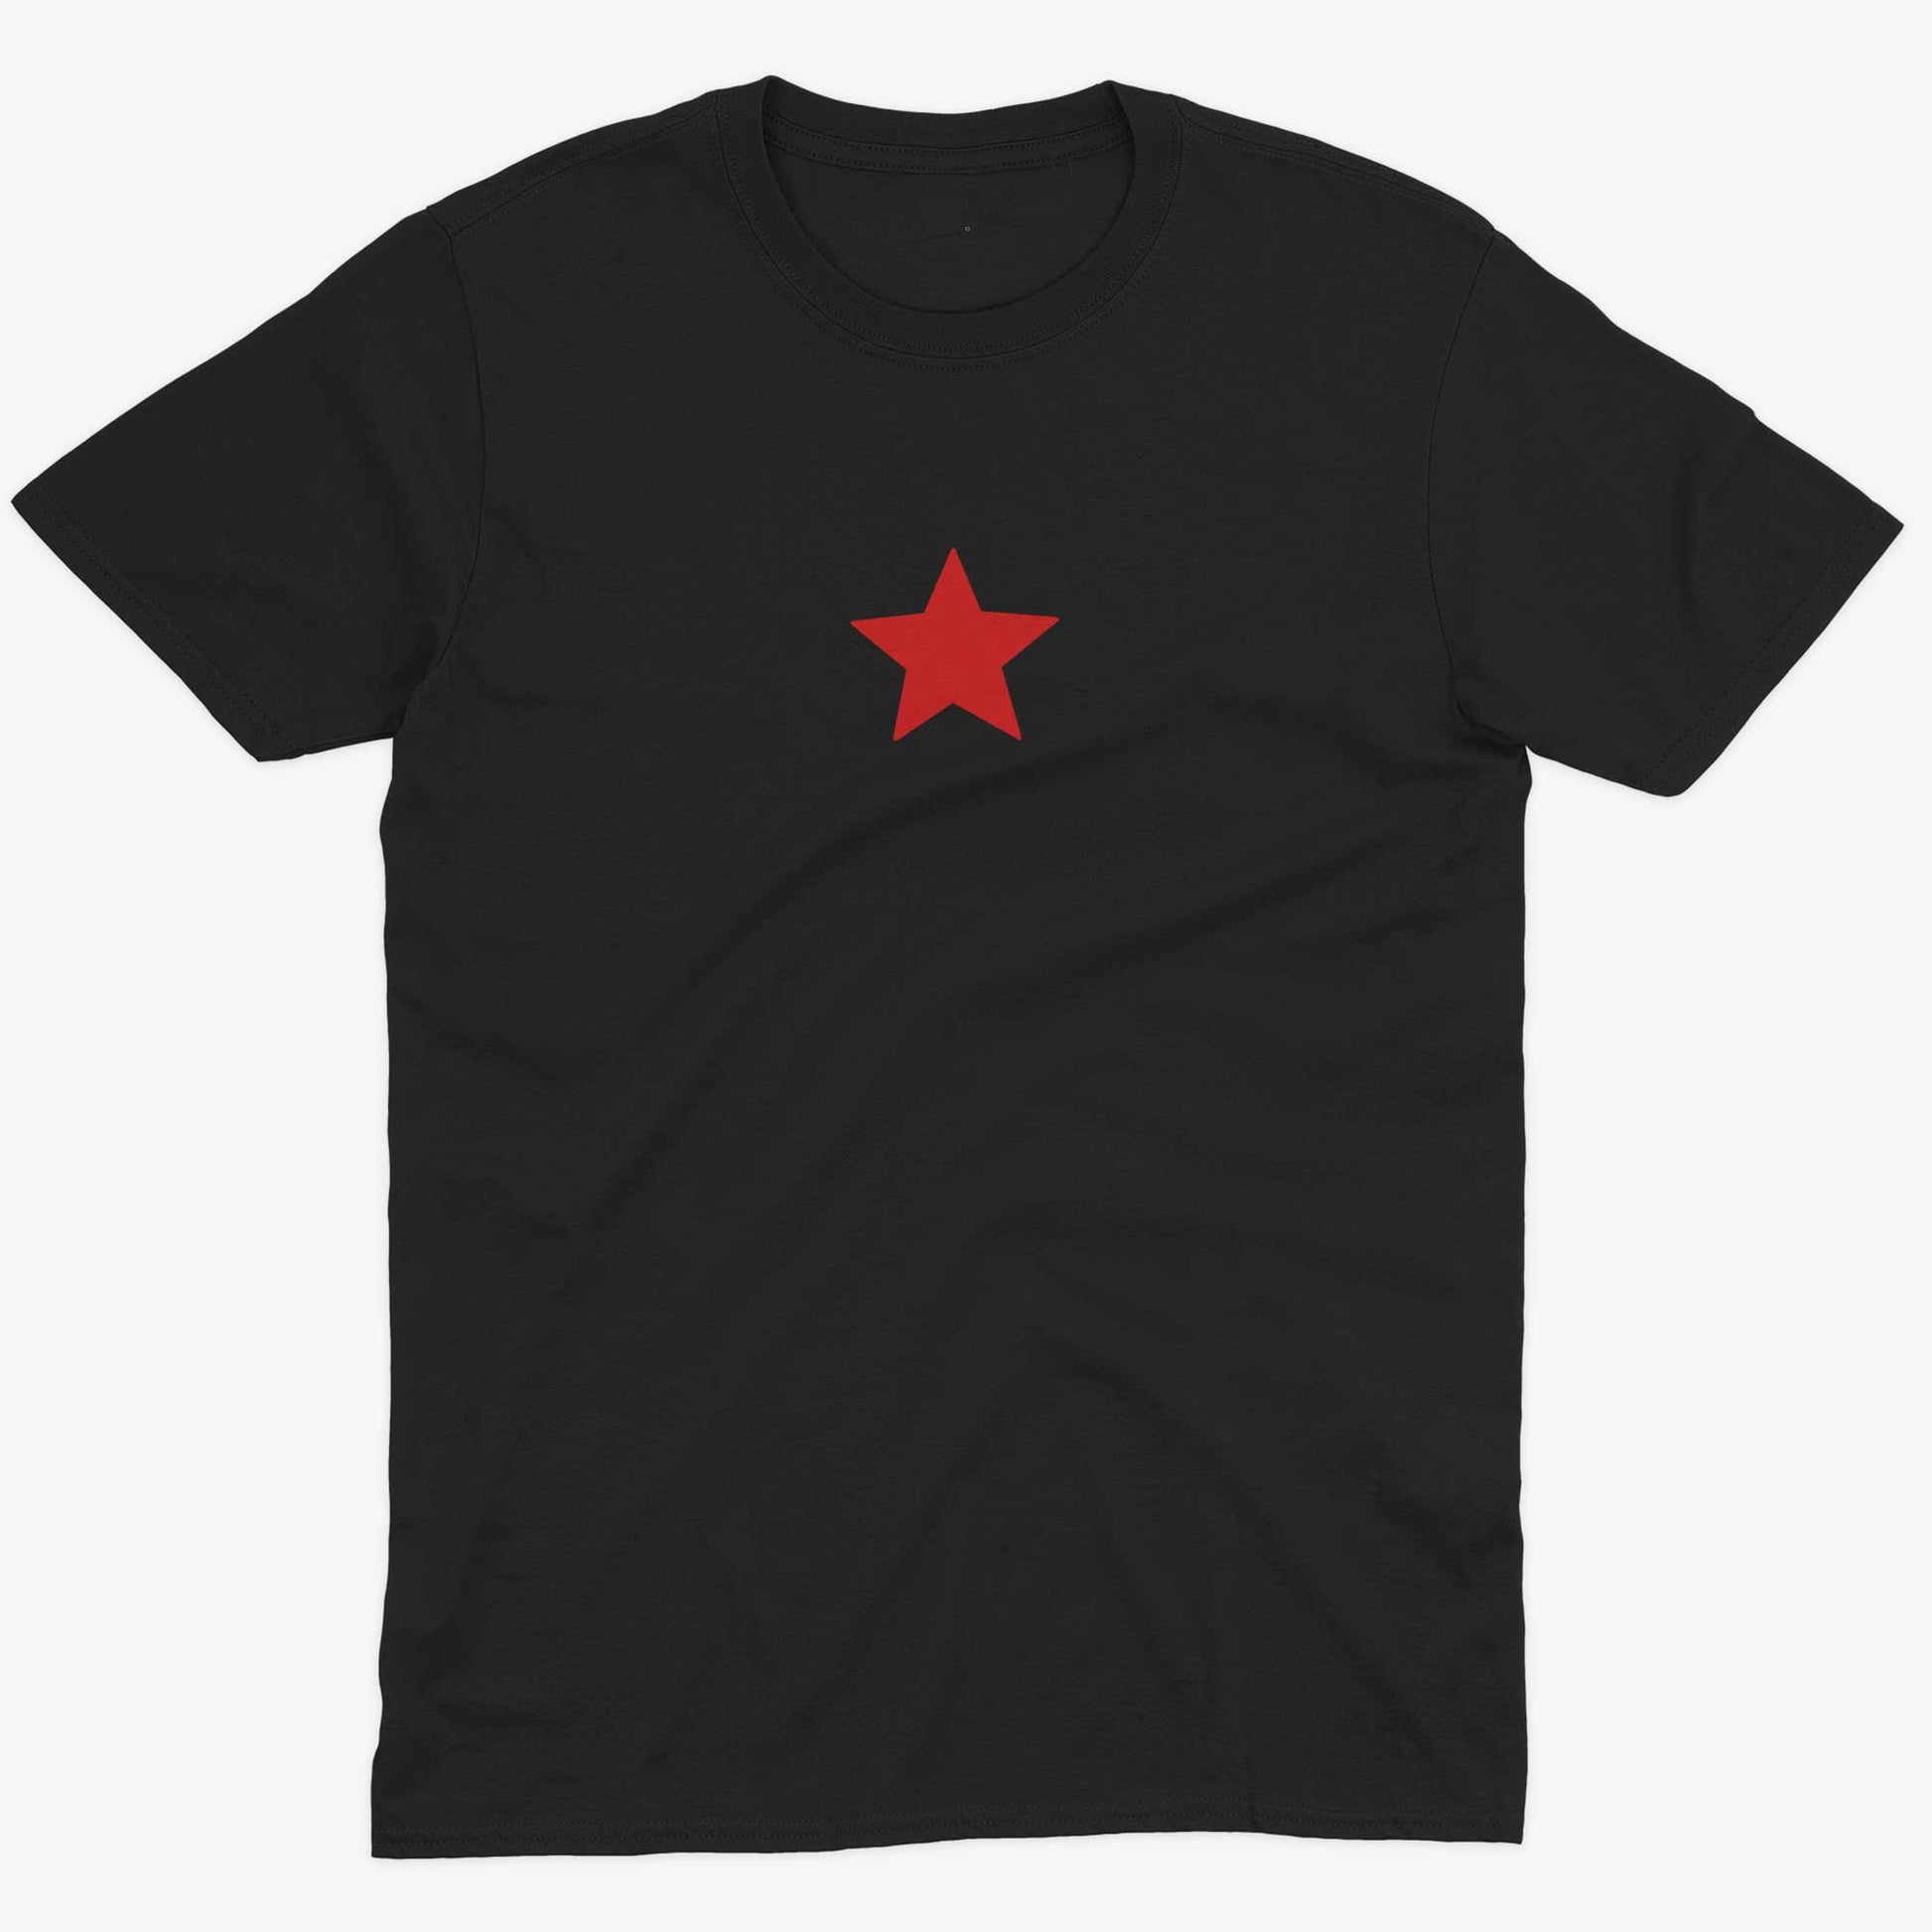 Five-Point Red Star Unisex Or Women's Cotton T-shirt-Black-Unisex